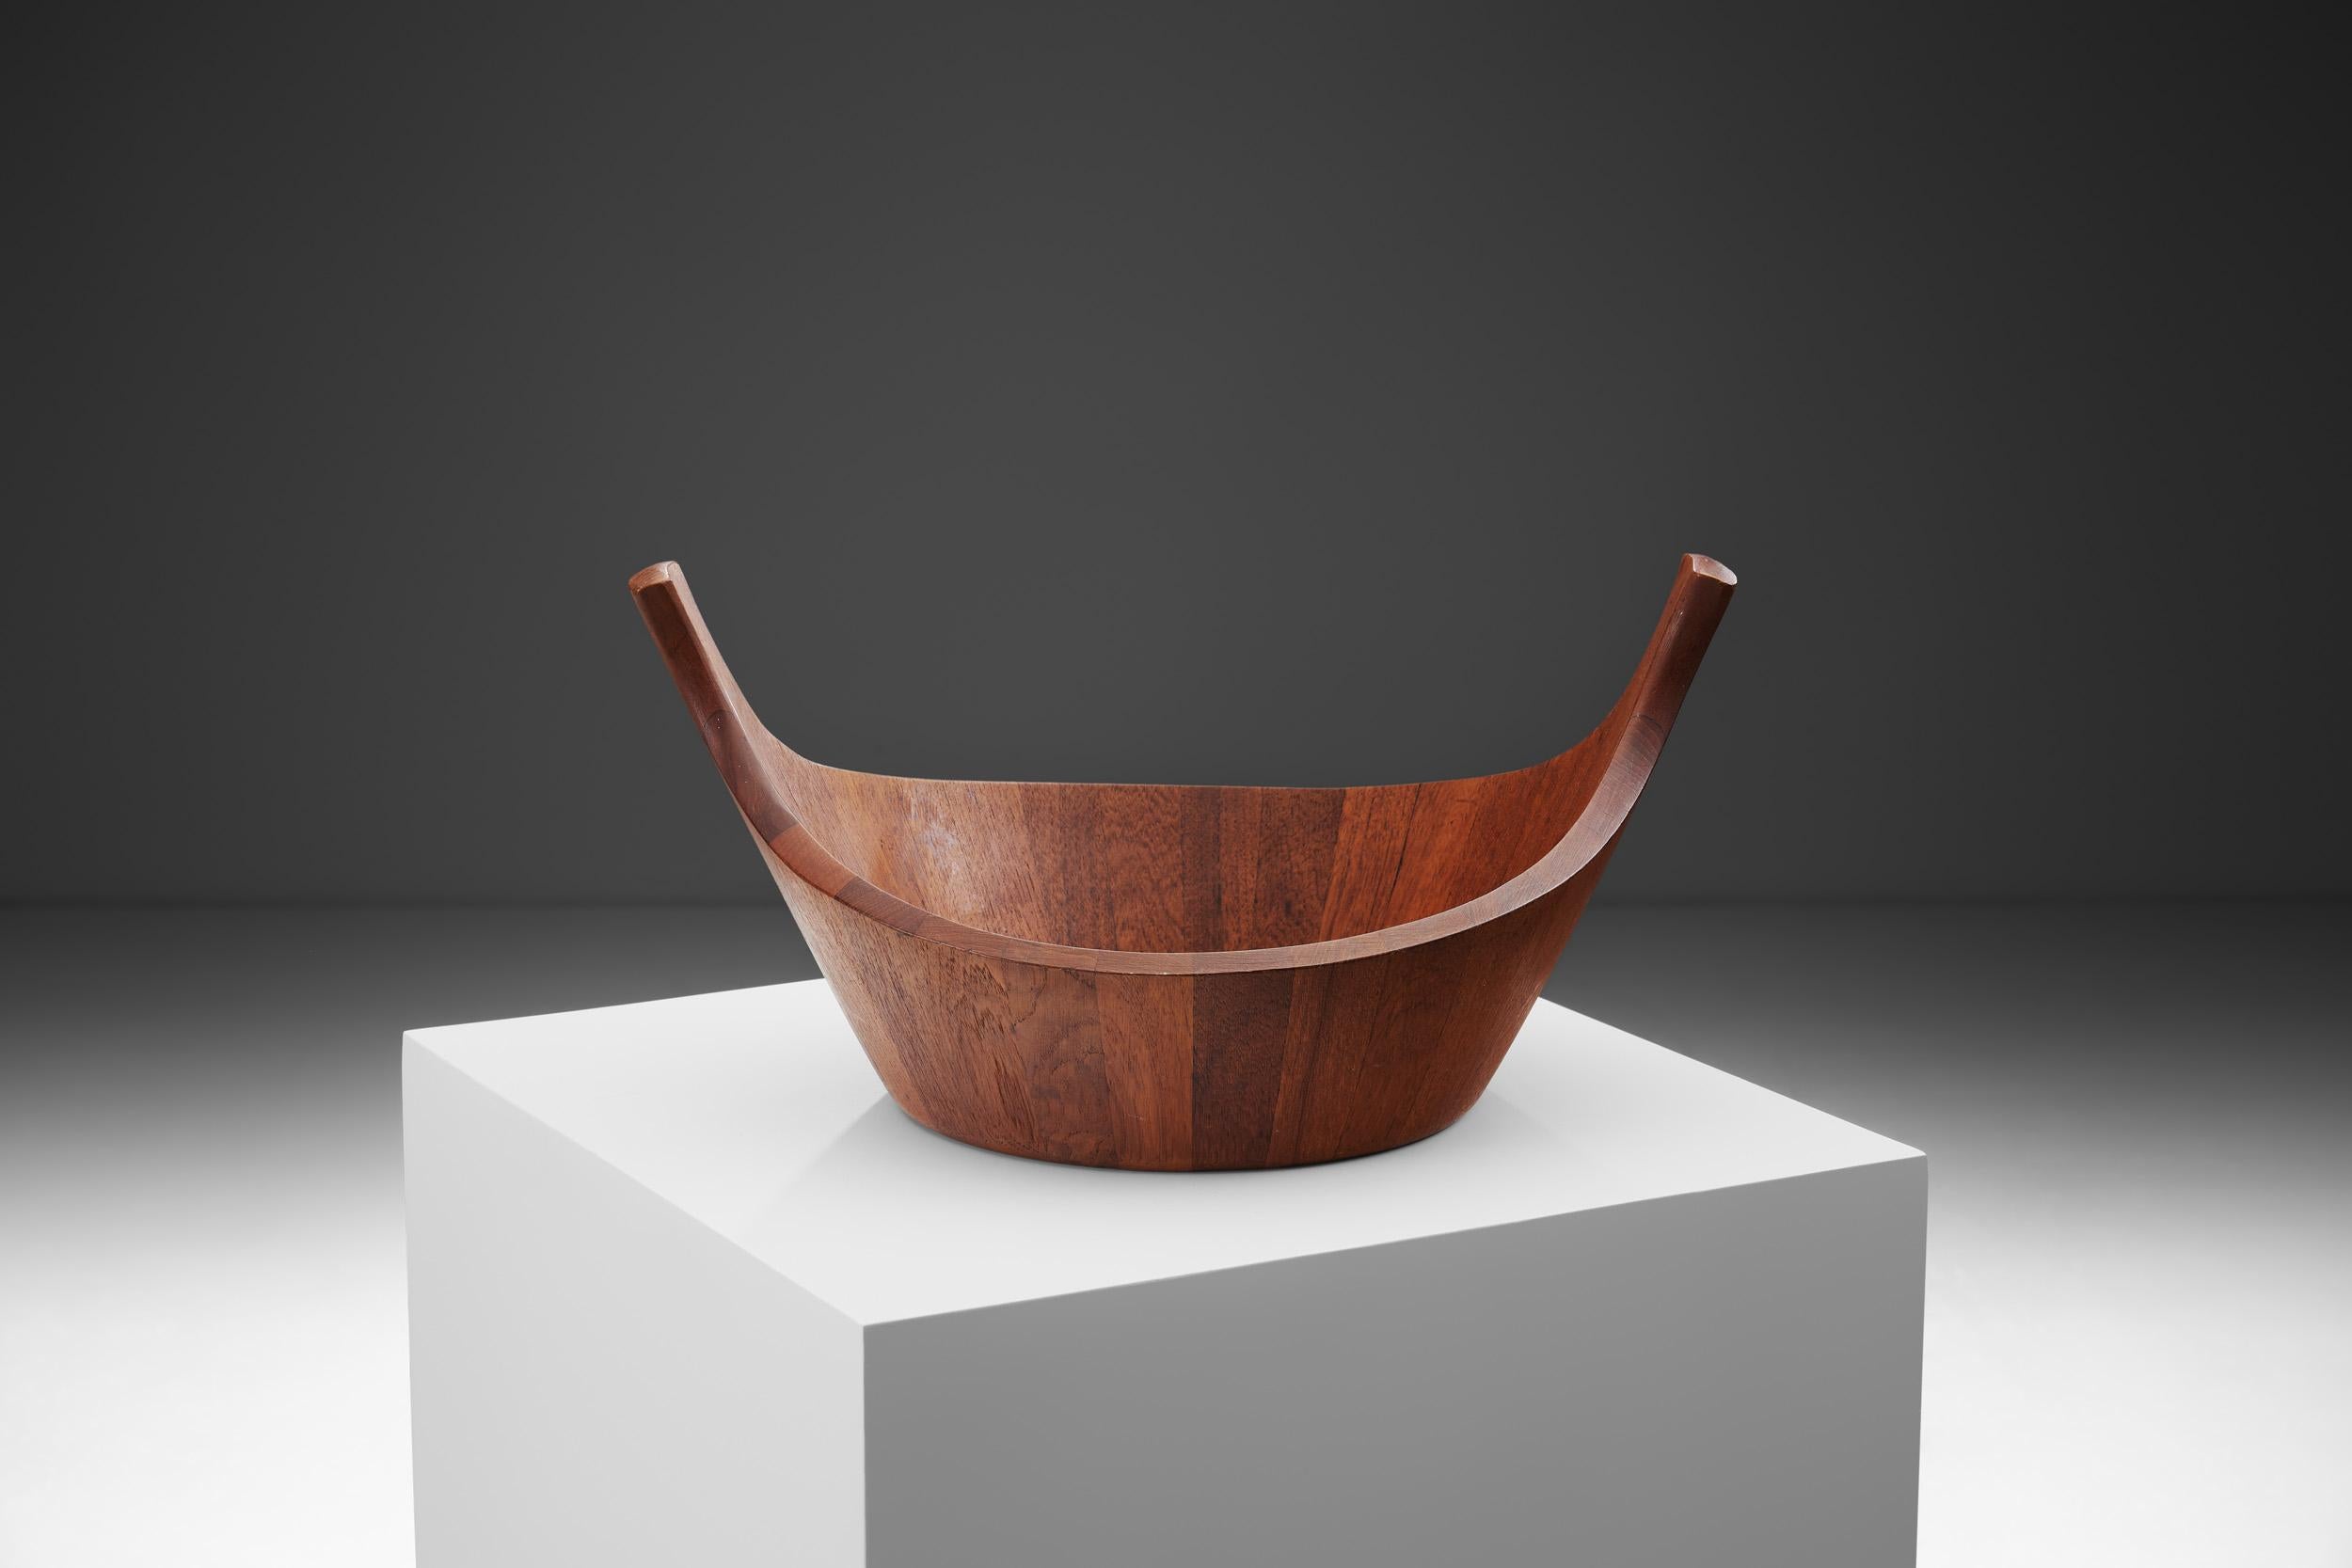 Scandinavian Modern Jens Quistgaard Staved Teak Bowl for Dansk Design, Denmark, 1950s